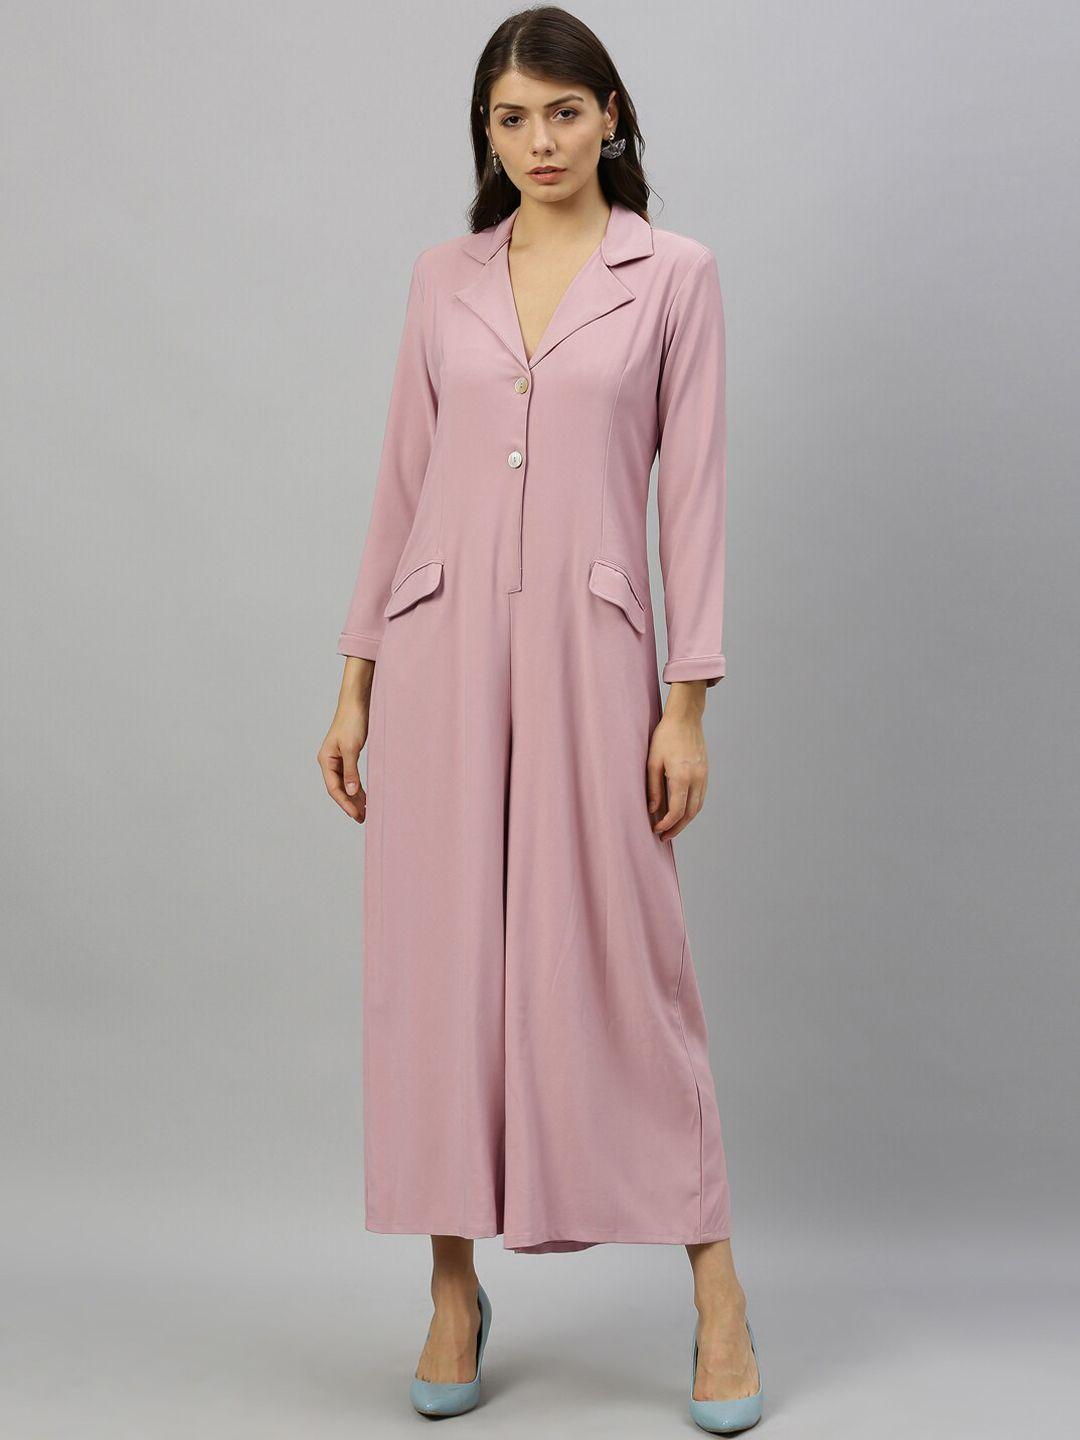 rareism women pink solid culotte jumpsuit